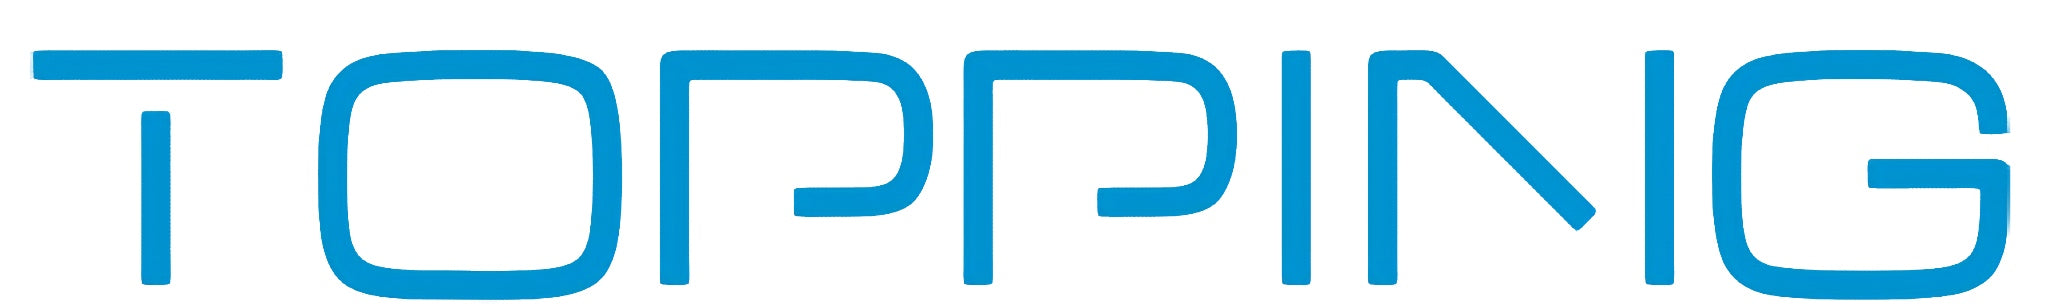 Topping logo blue